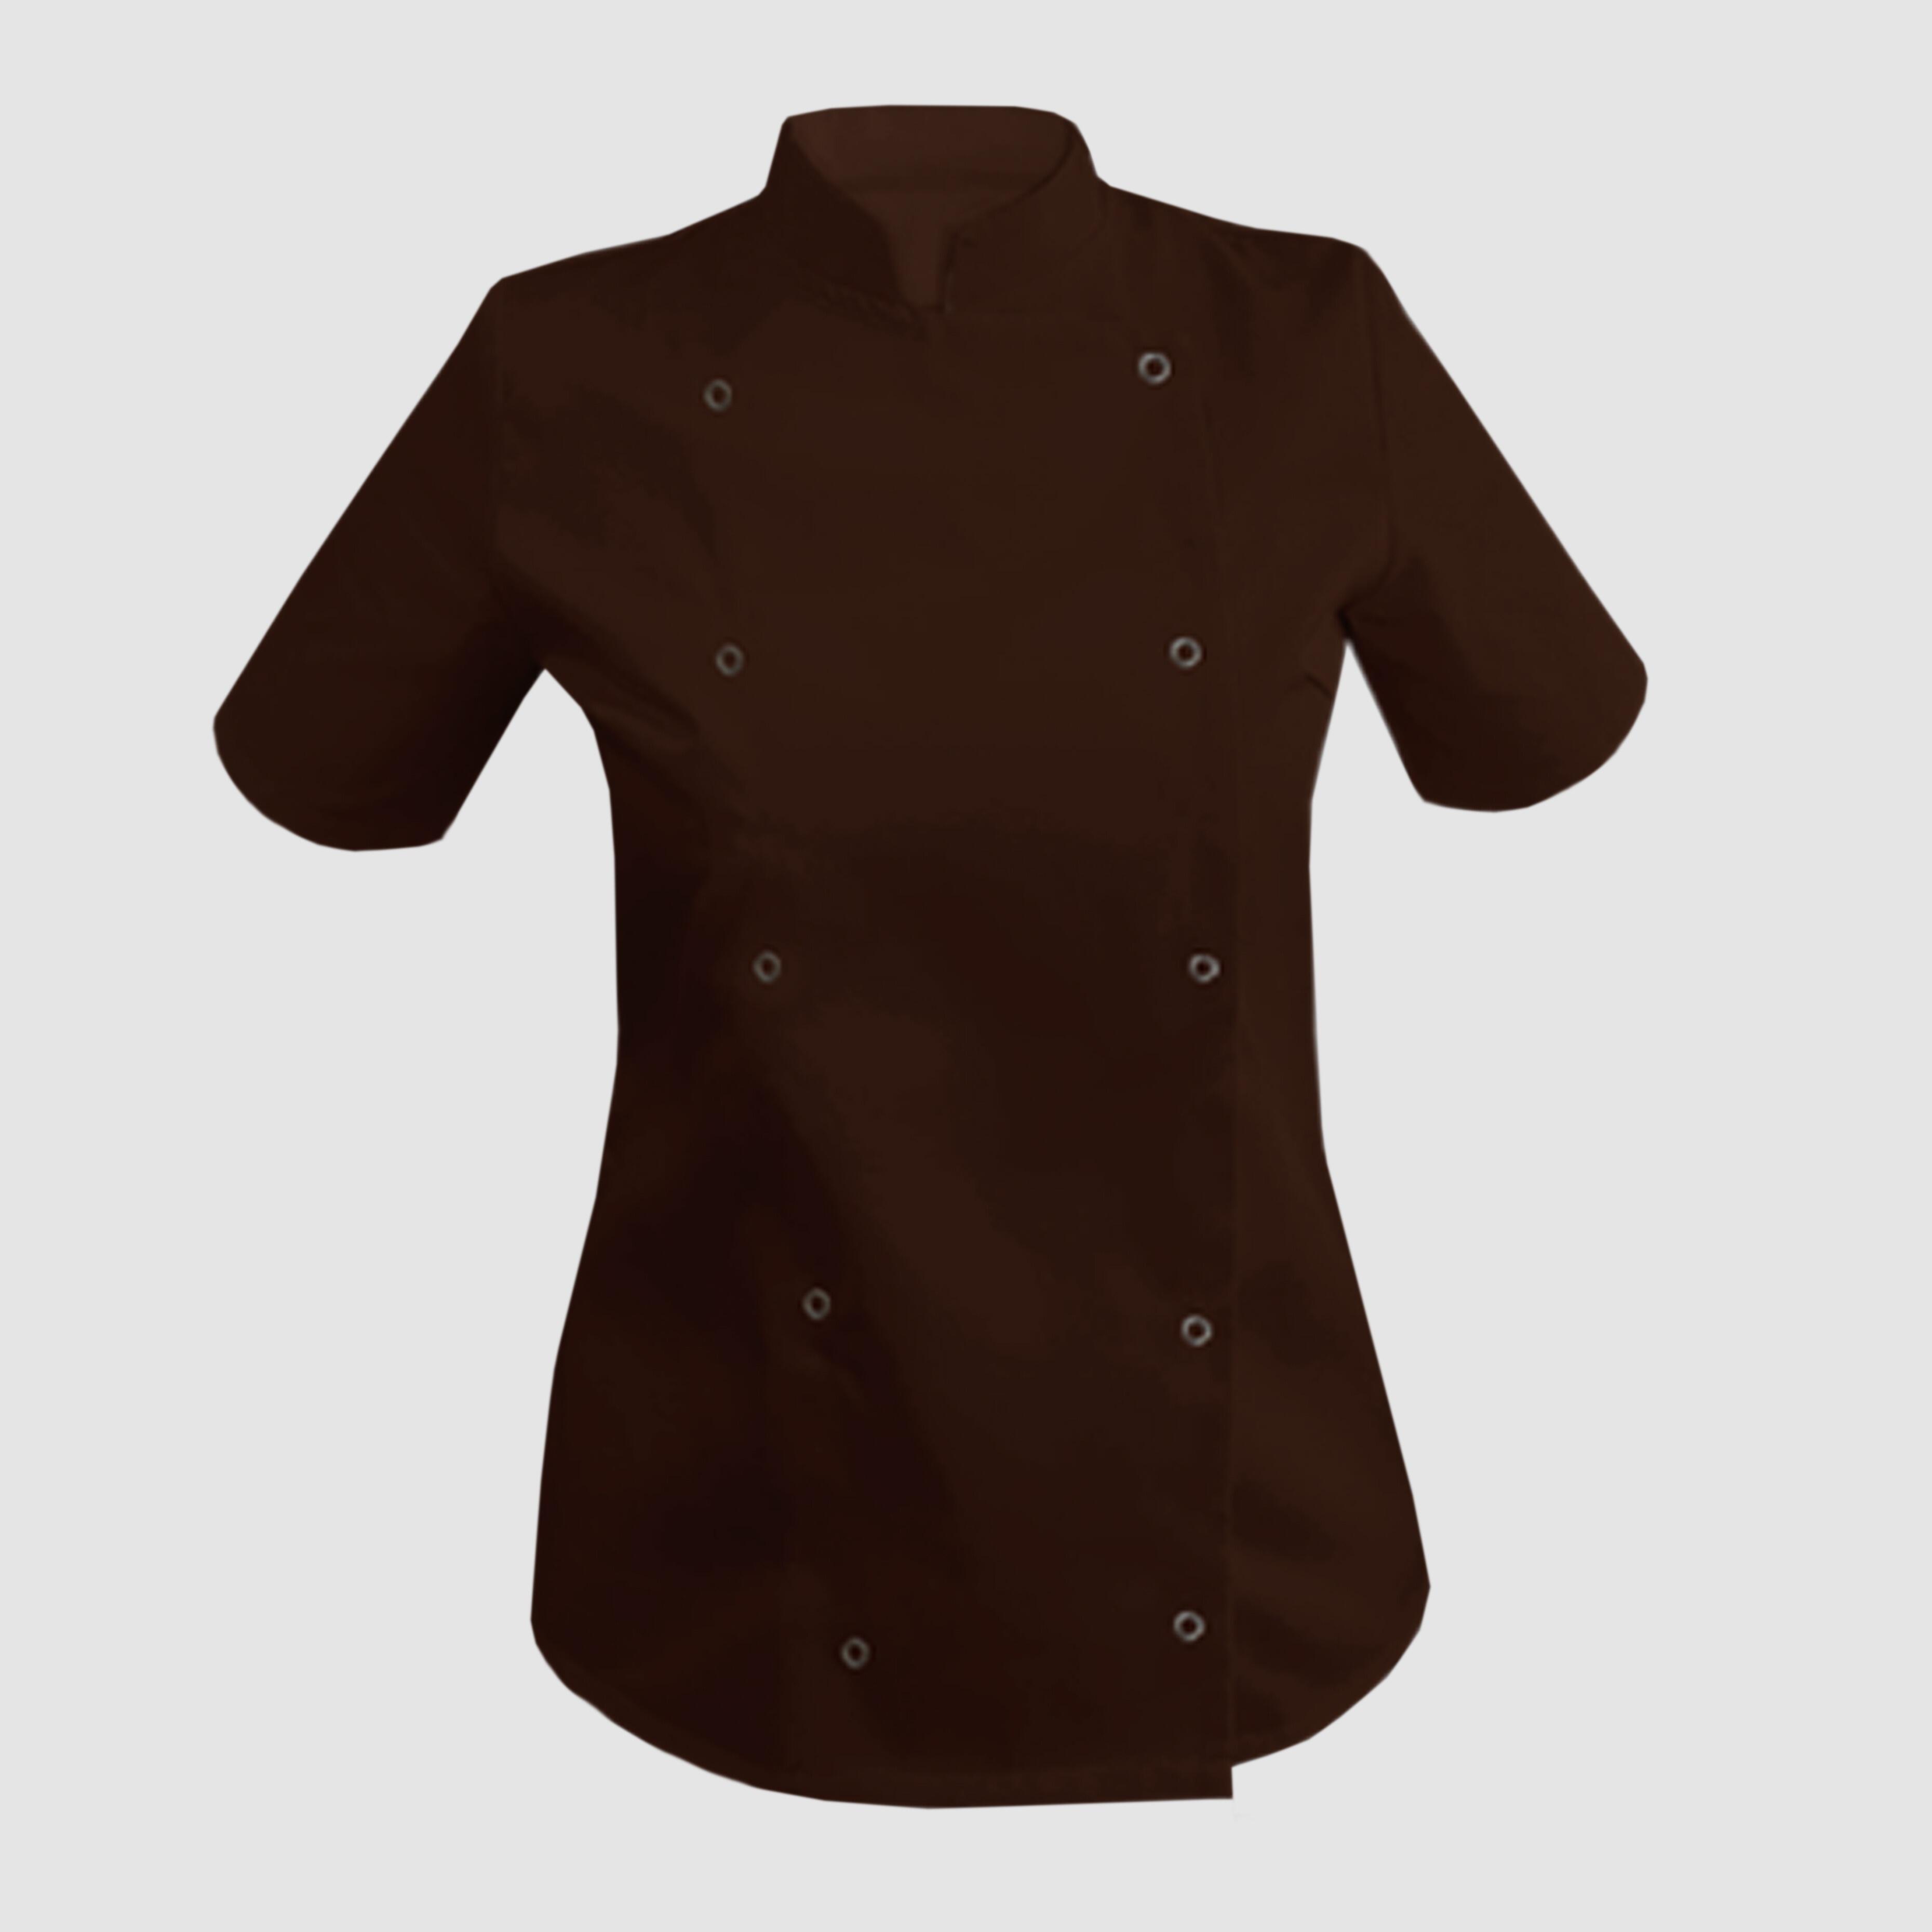 Nibano Women's Short Sleeve Chef's Jacket Brown